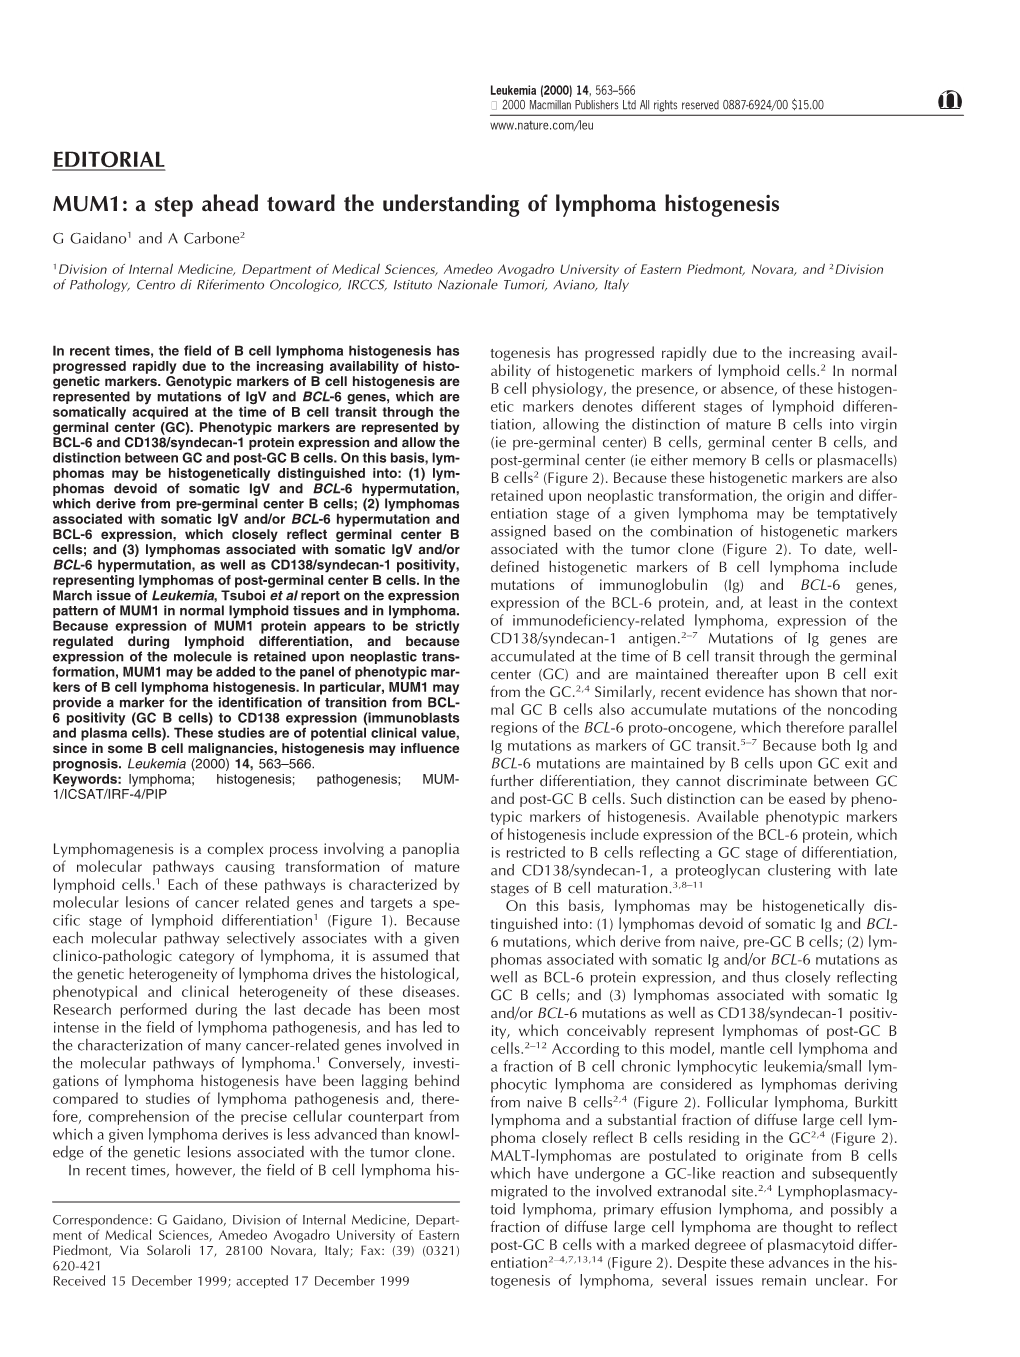 MUM1: a Step Ahead Toward the Understanding of Lymphoma Histogenesis G Gaidano1 and a Carbone2